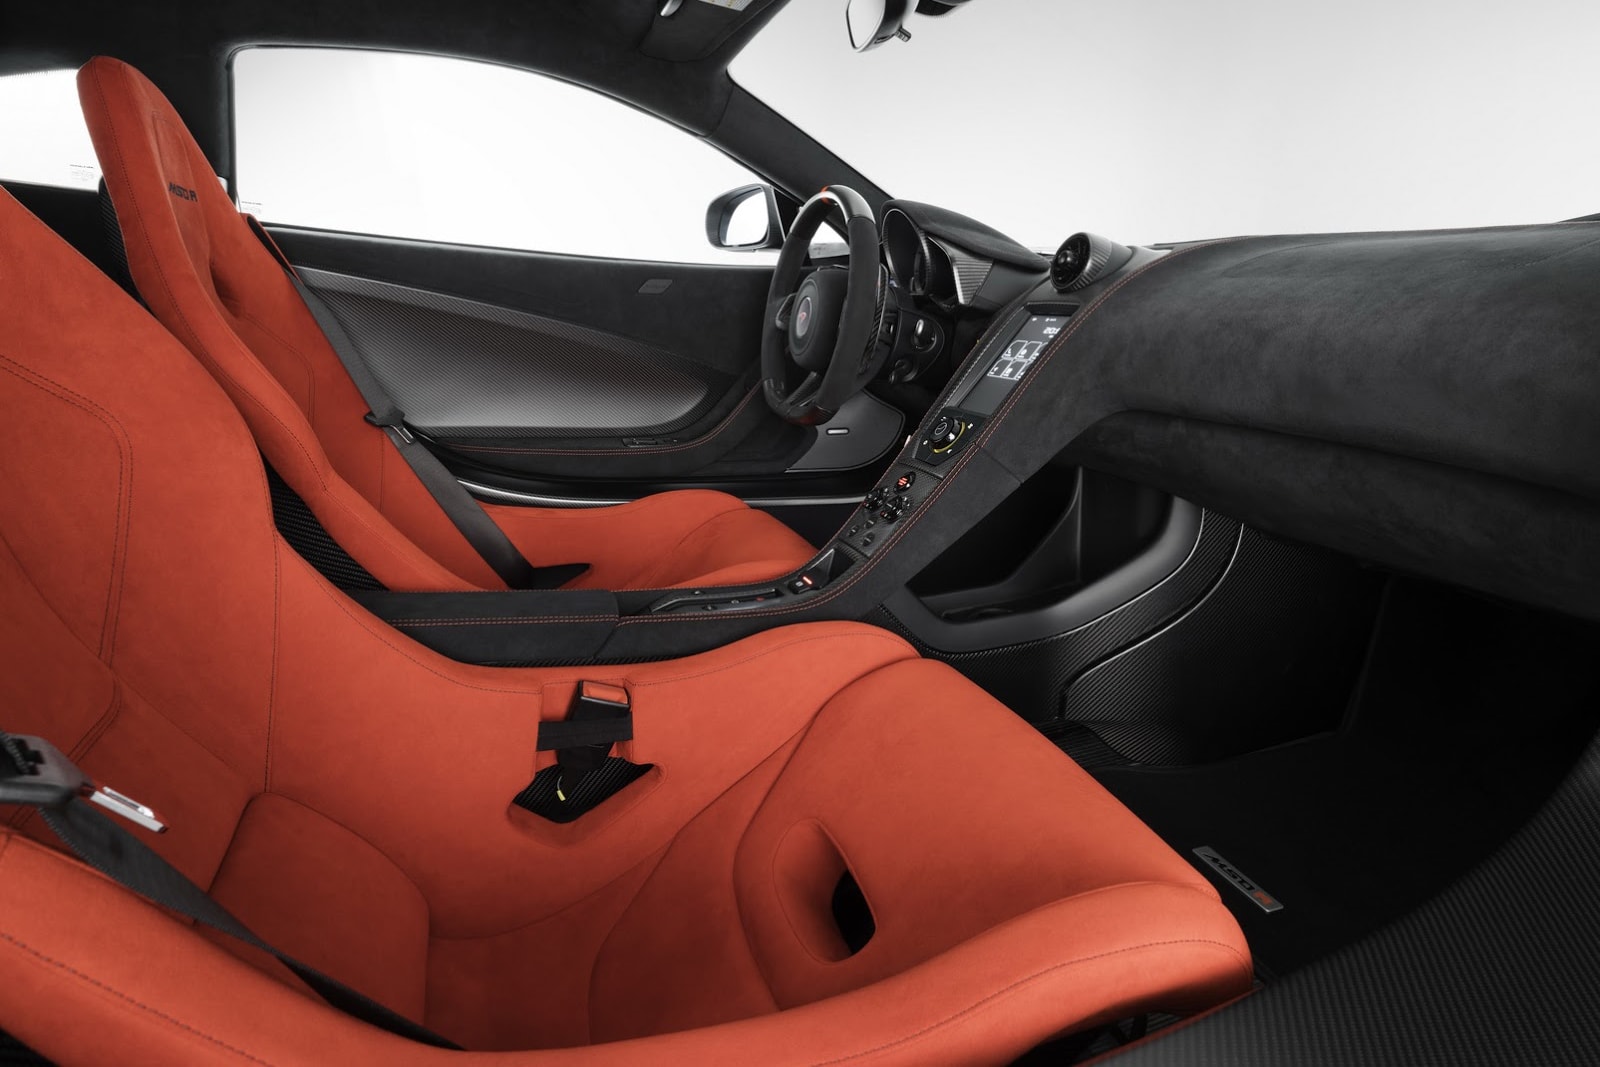 McLaren MSO Matching R Coupe Spider Visual Carbon Fiber Components Surrey England Liquid Silver Hypercar Supercar Customs